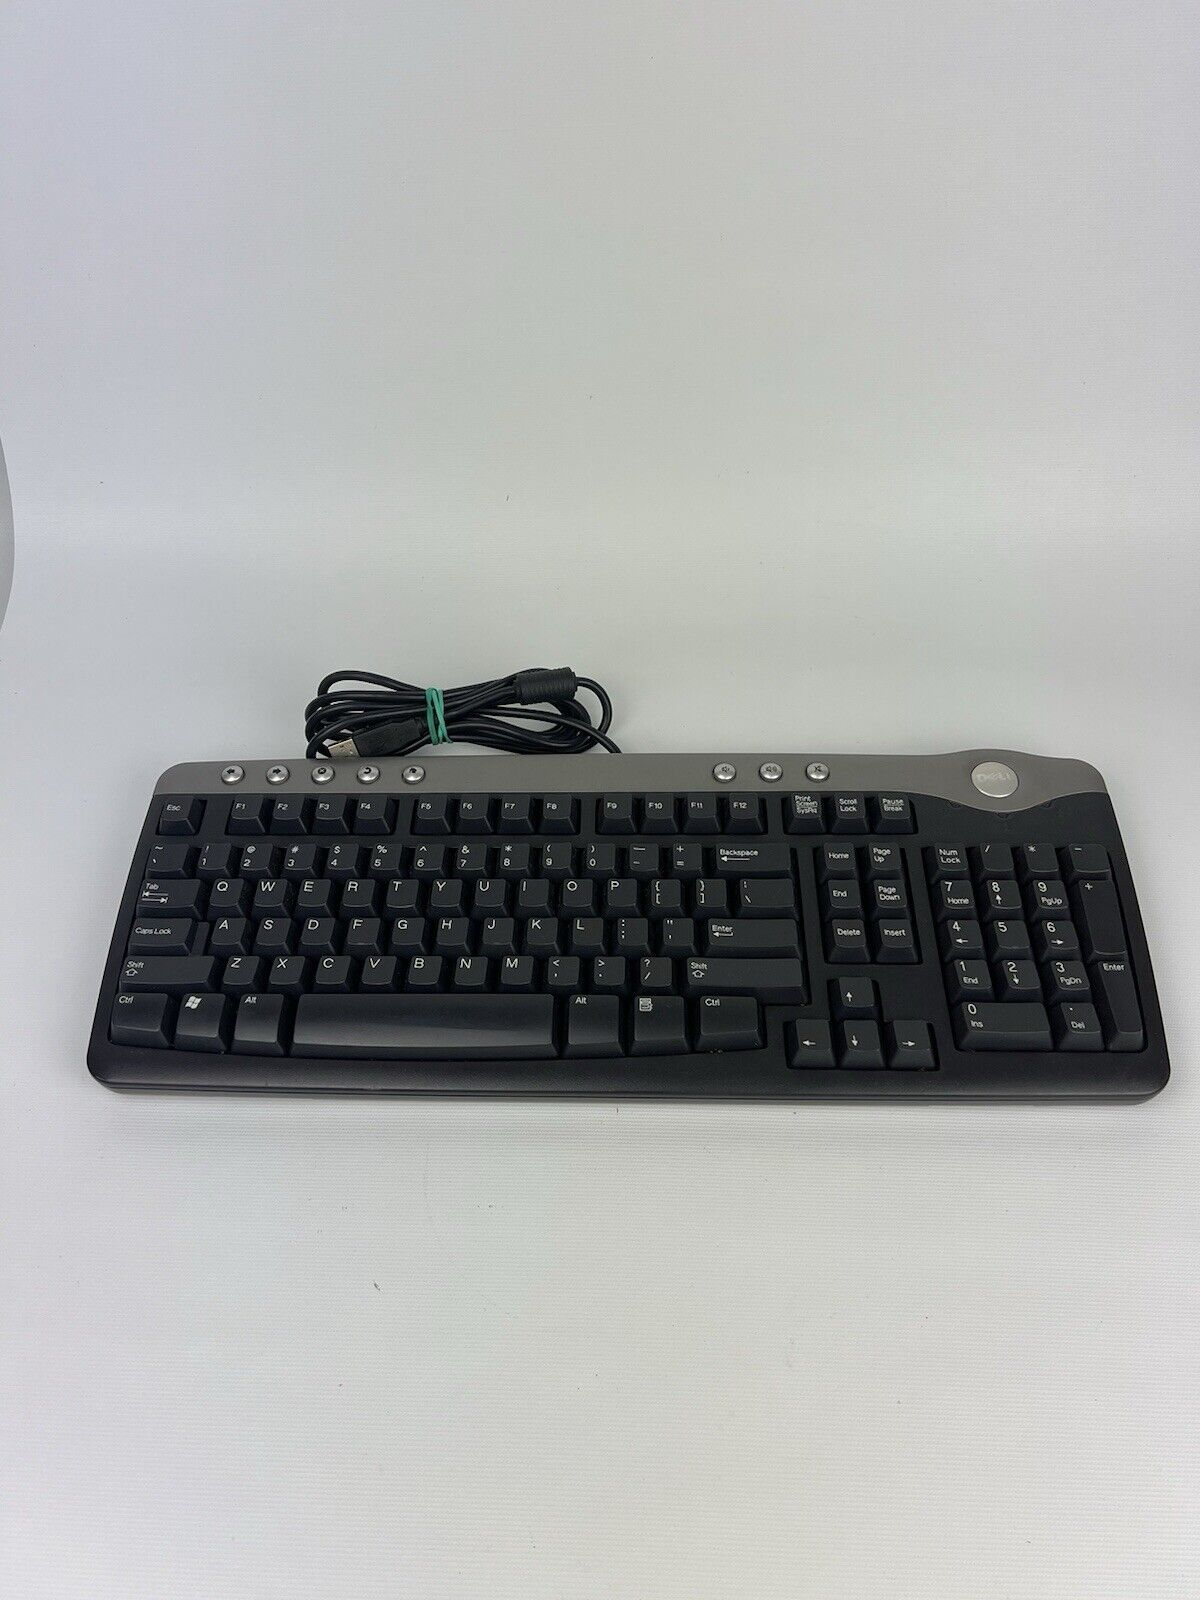 Dell SK-8125 Multimedia Wired USB Standard Keyboard 06W610 - Tested